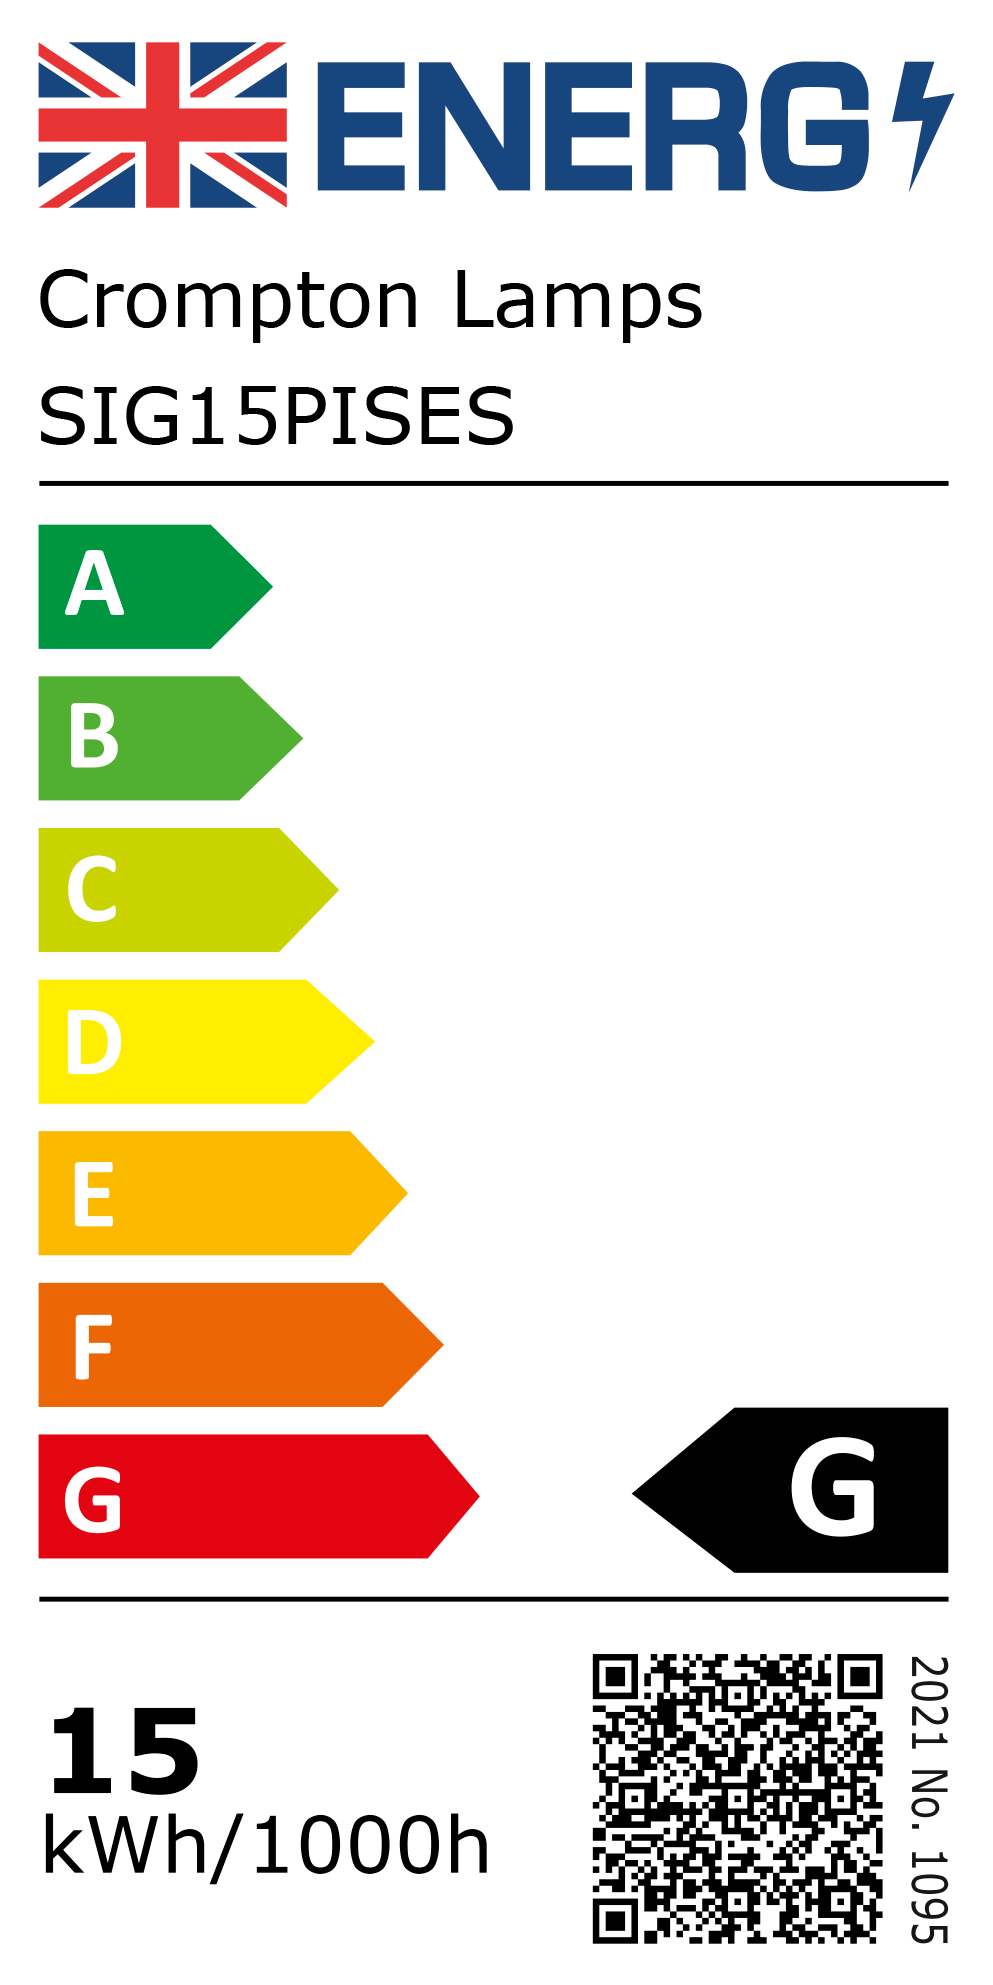 New 2021 Energy Rating Label: MPN SIG15PISES